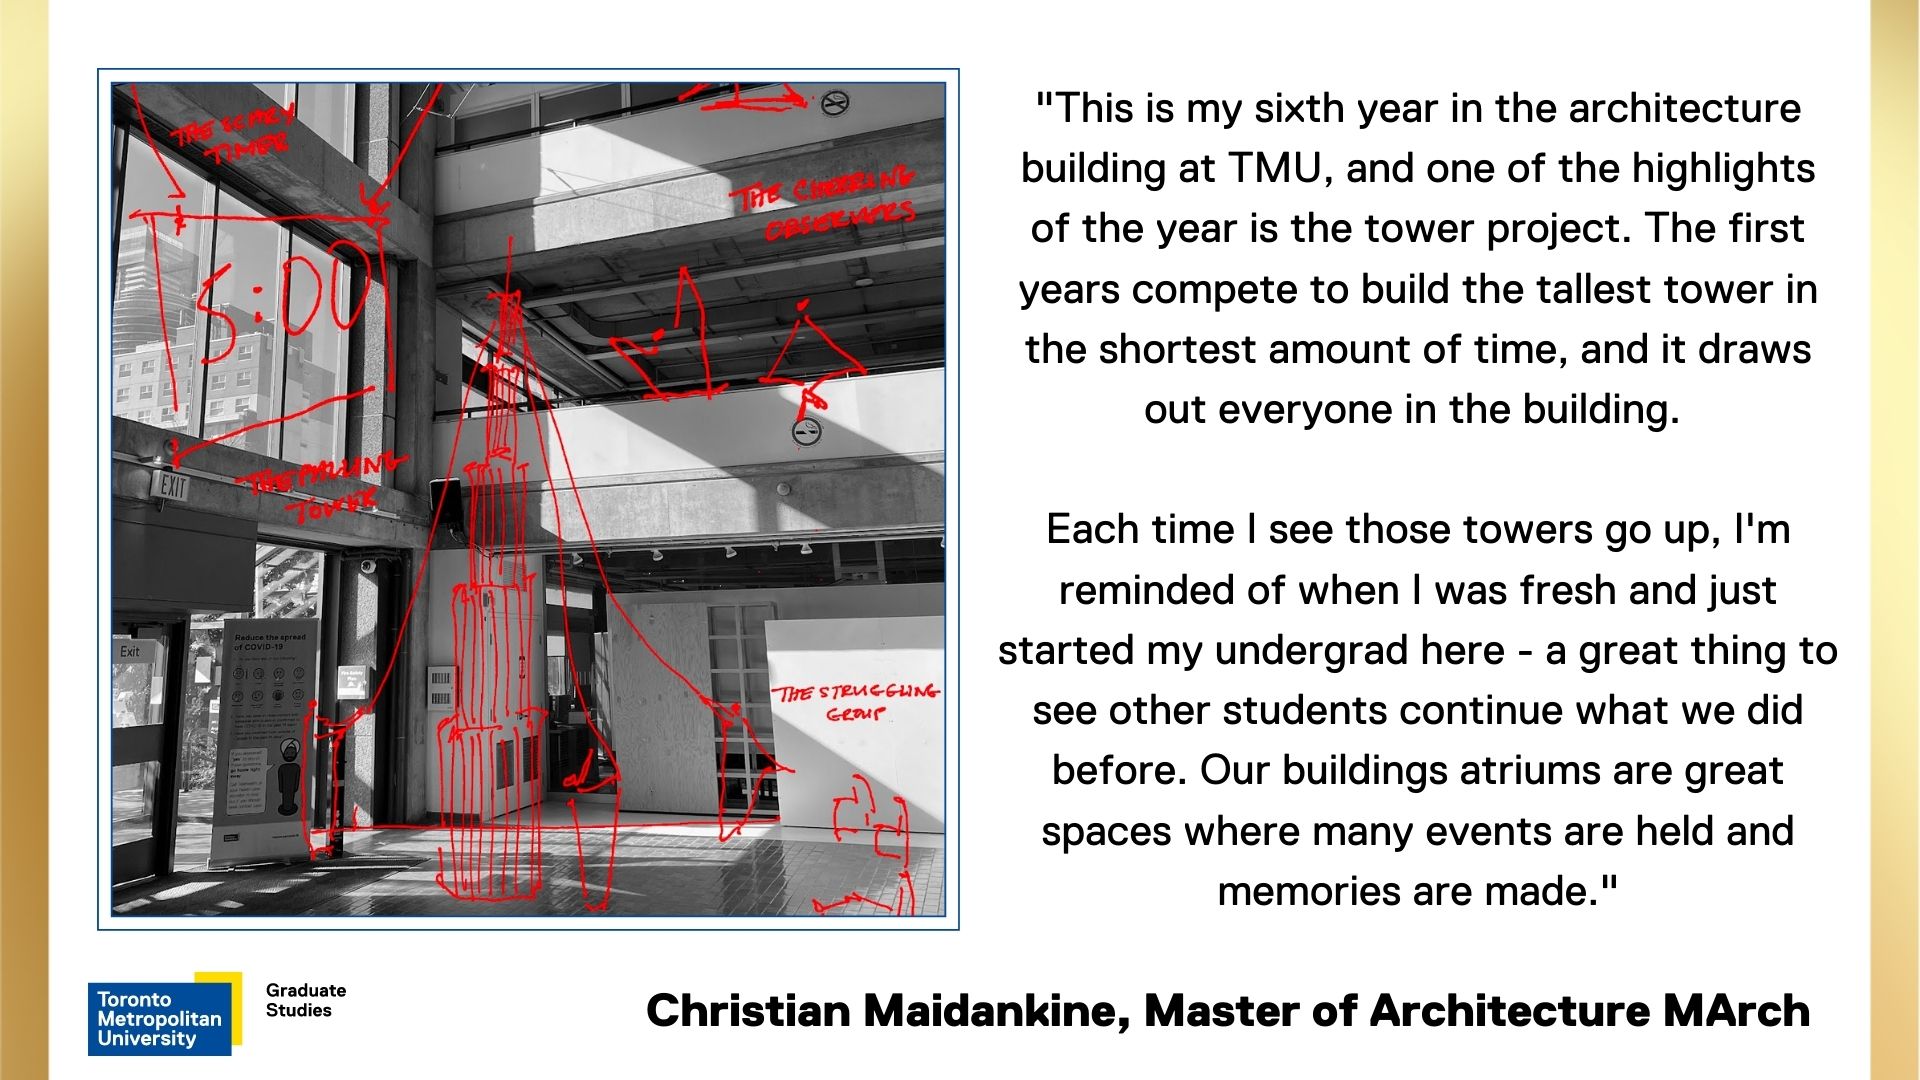 Christian-Maidankine. Architecture building with redline work layered overlayed on image.